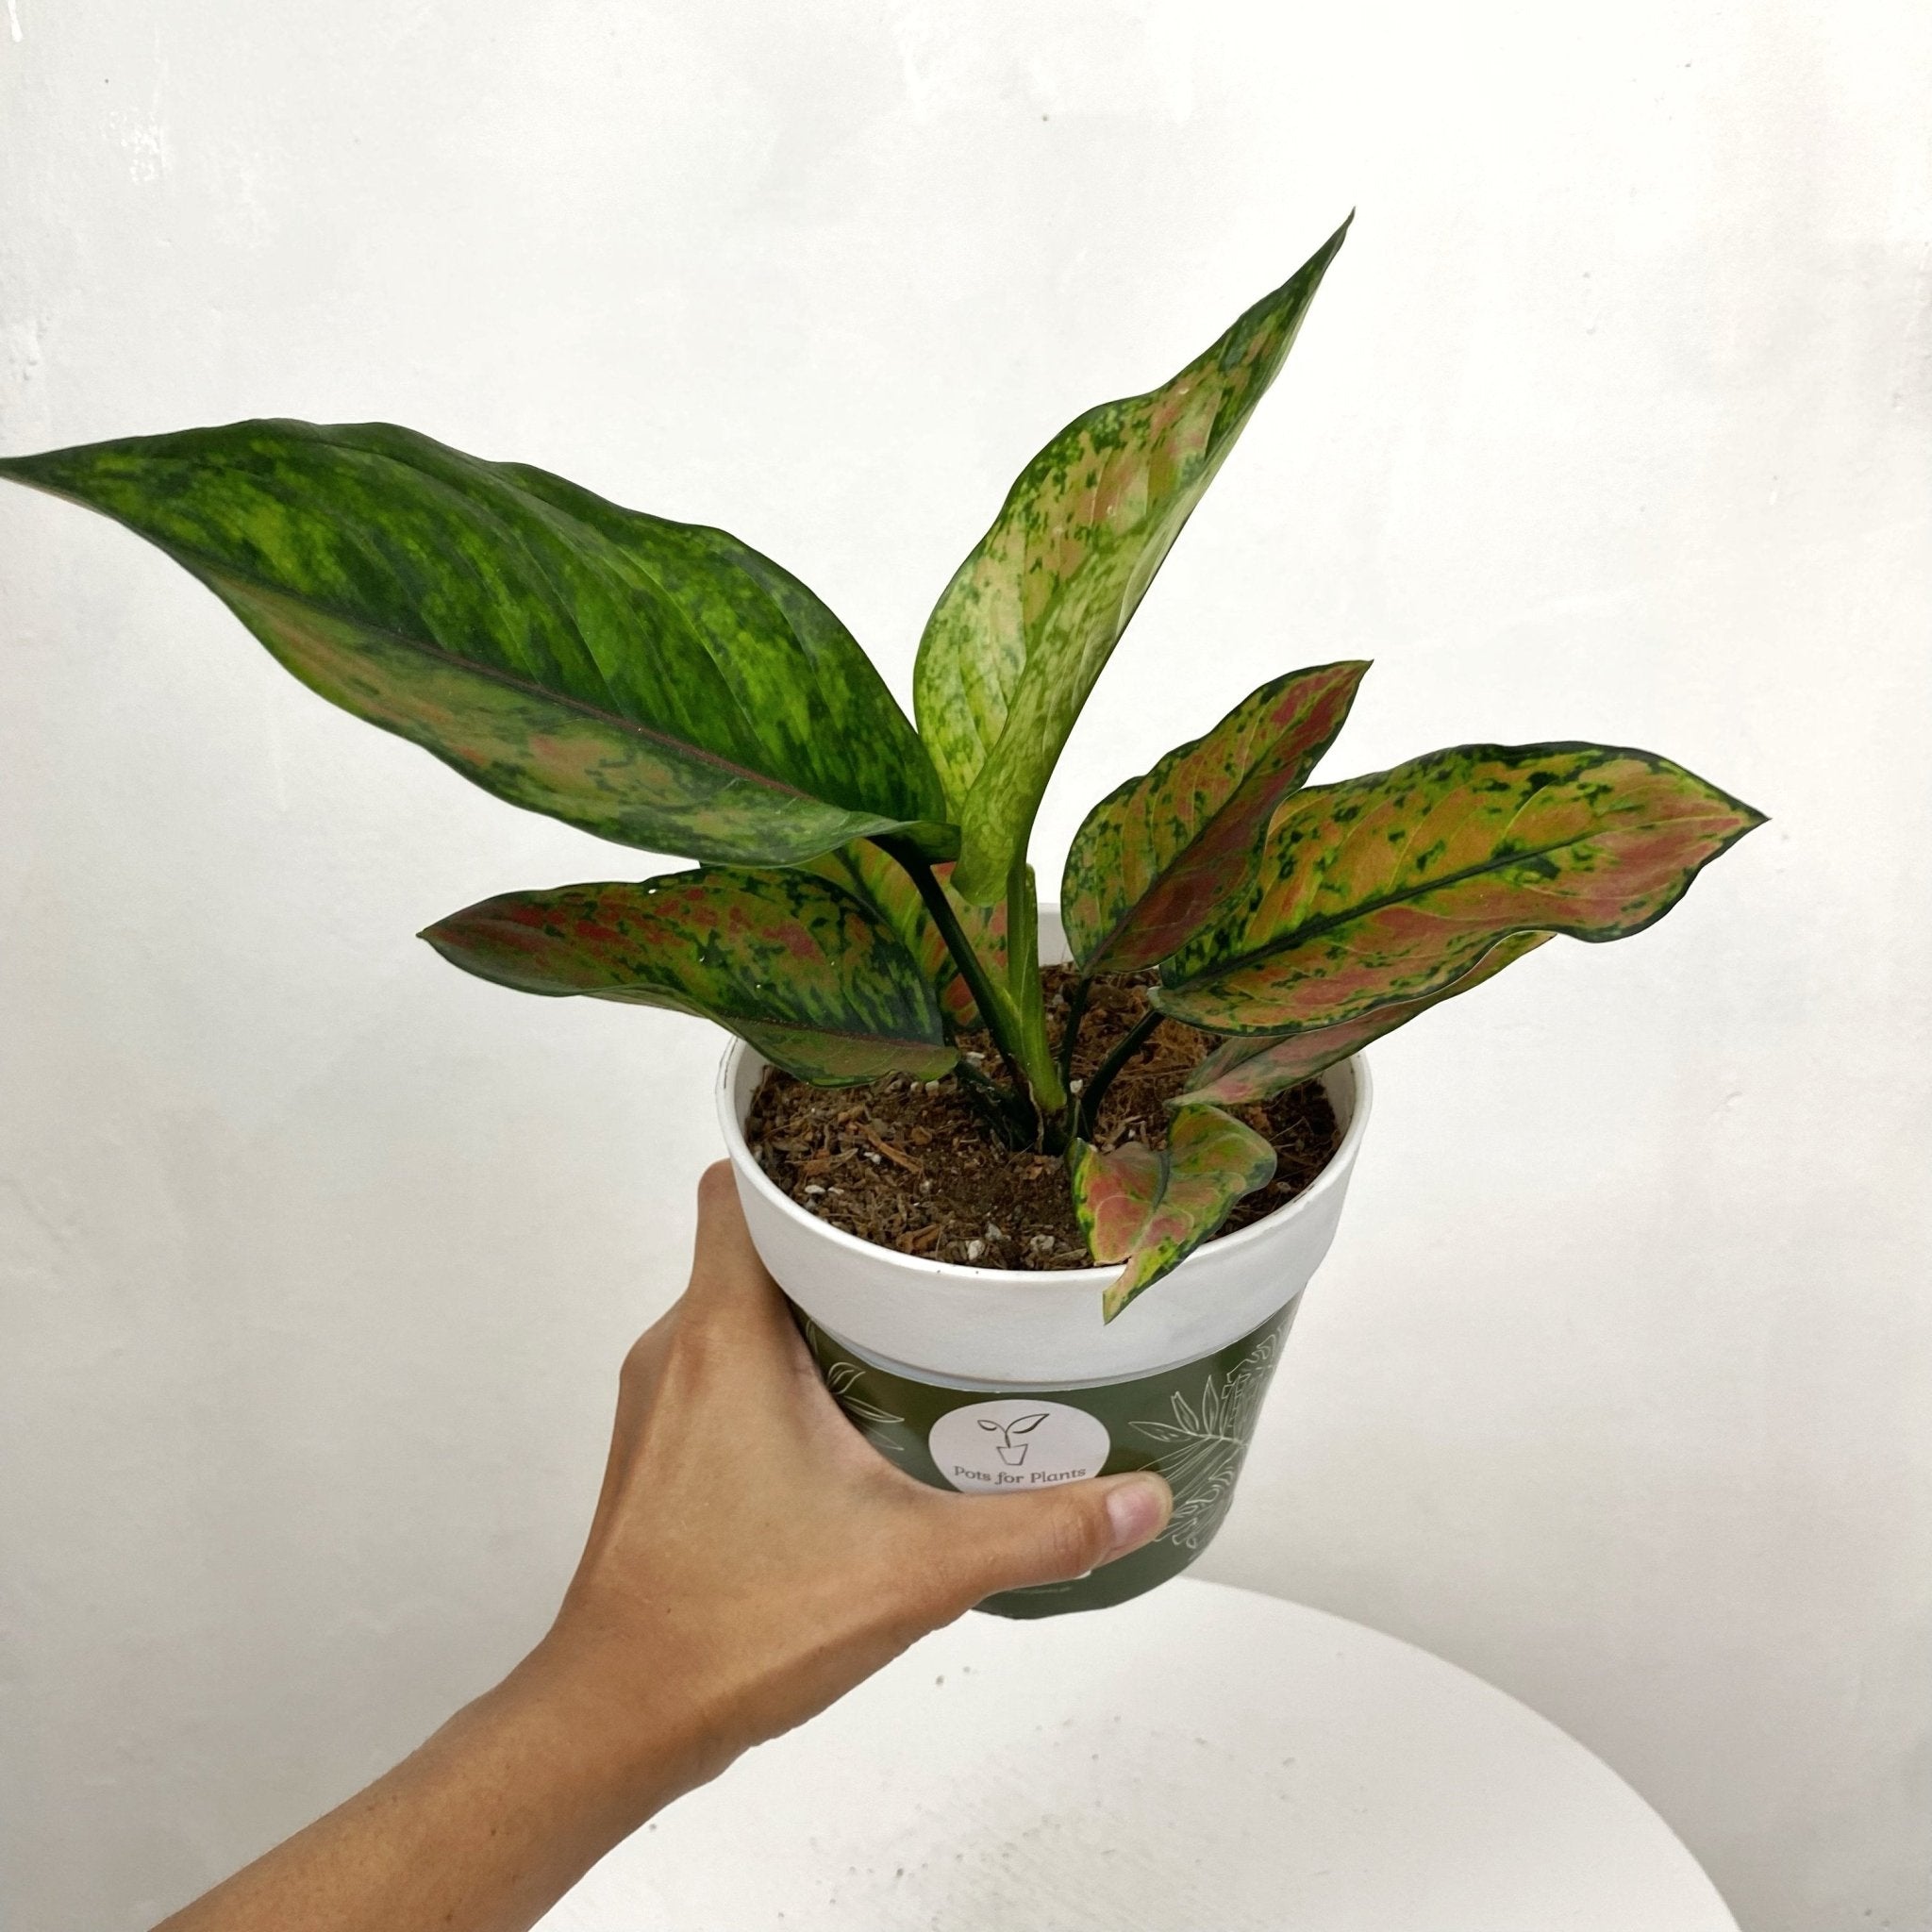 Aglaonema 'Heng Heng' - Pots For Plants